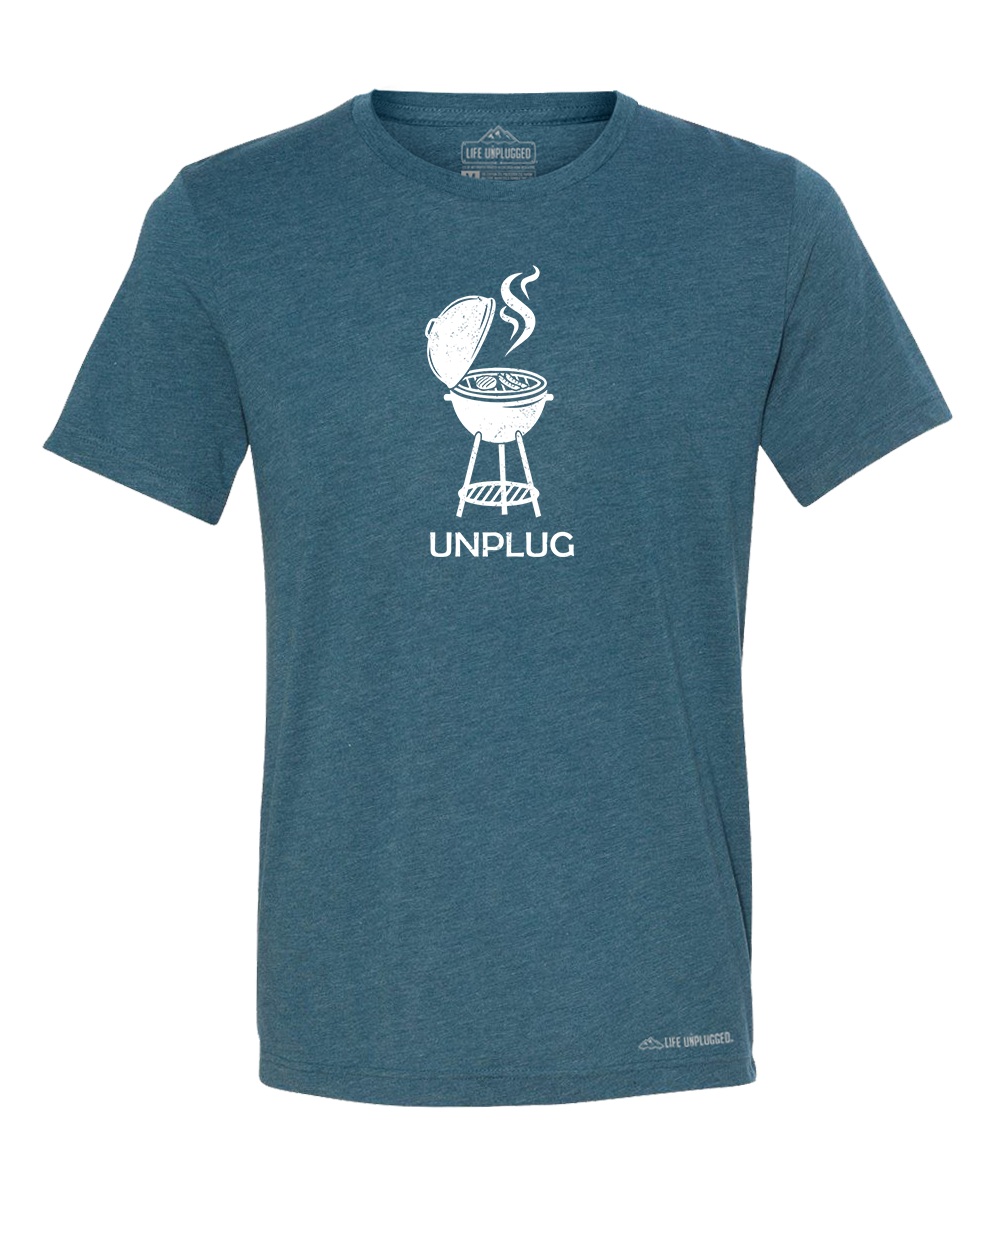 Grilling Premium Triblend T-Shirt